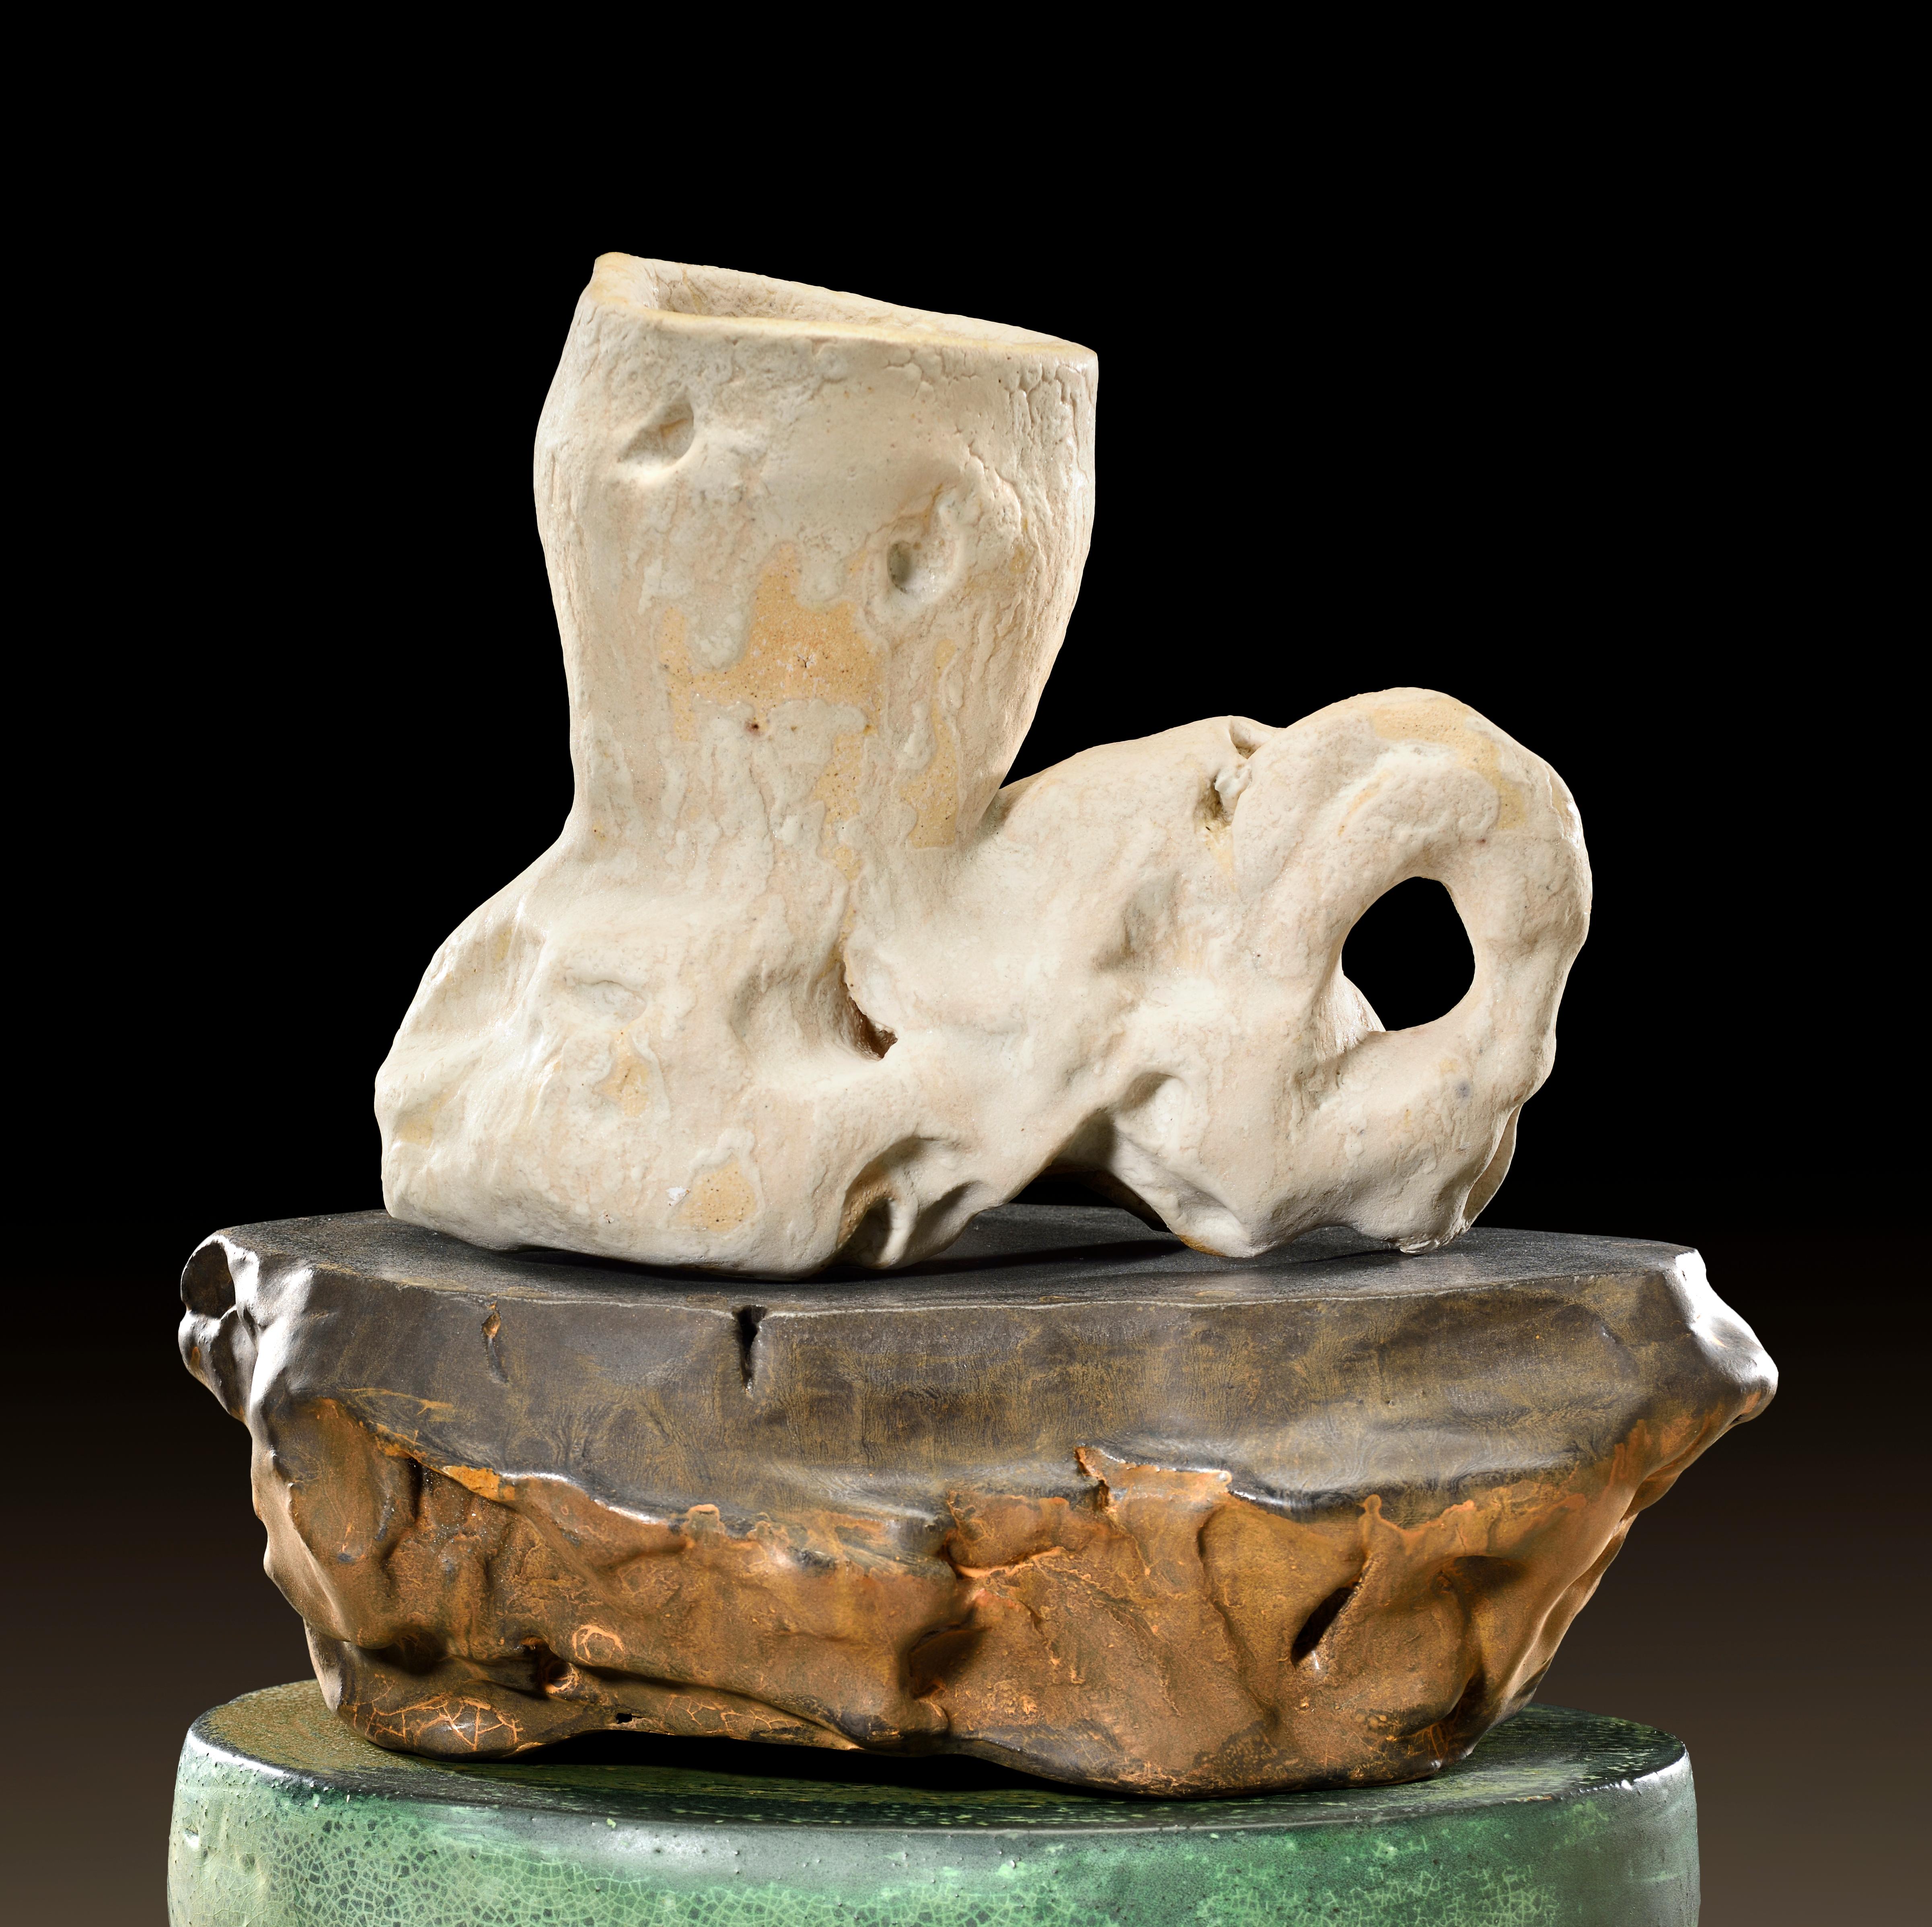 American Richard Hirsch Ceramic Scholar Rock Cup Sculpture #32, 2017 - 2018 For Sale